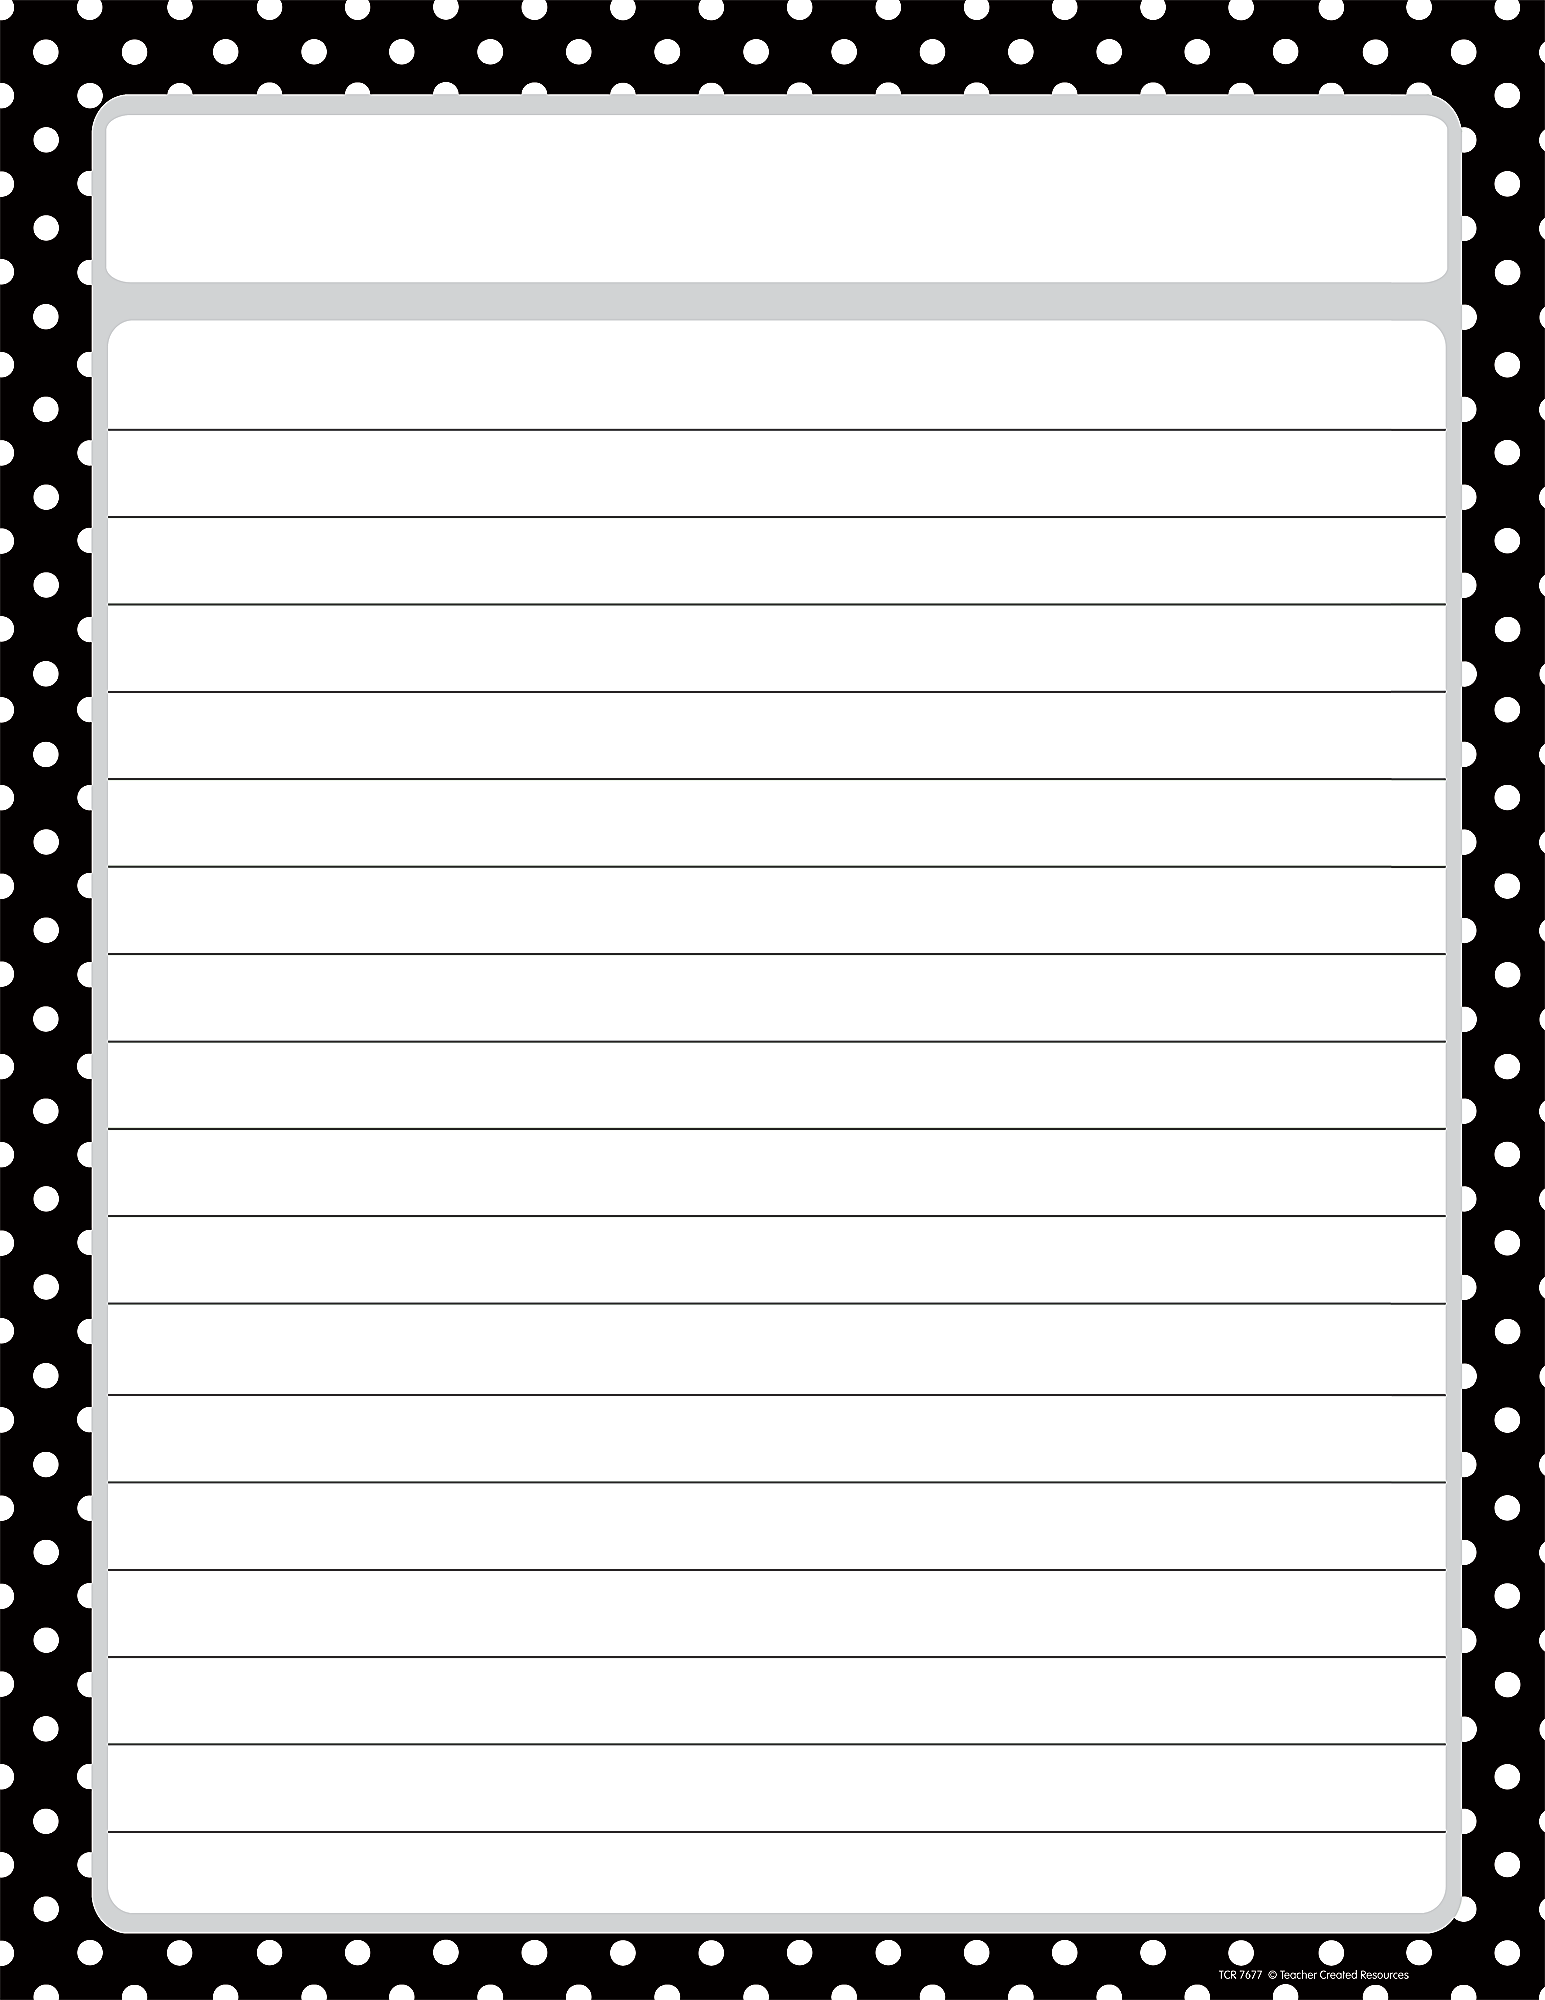 Black Polka Dots Lined Chart